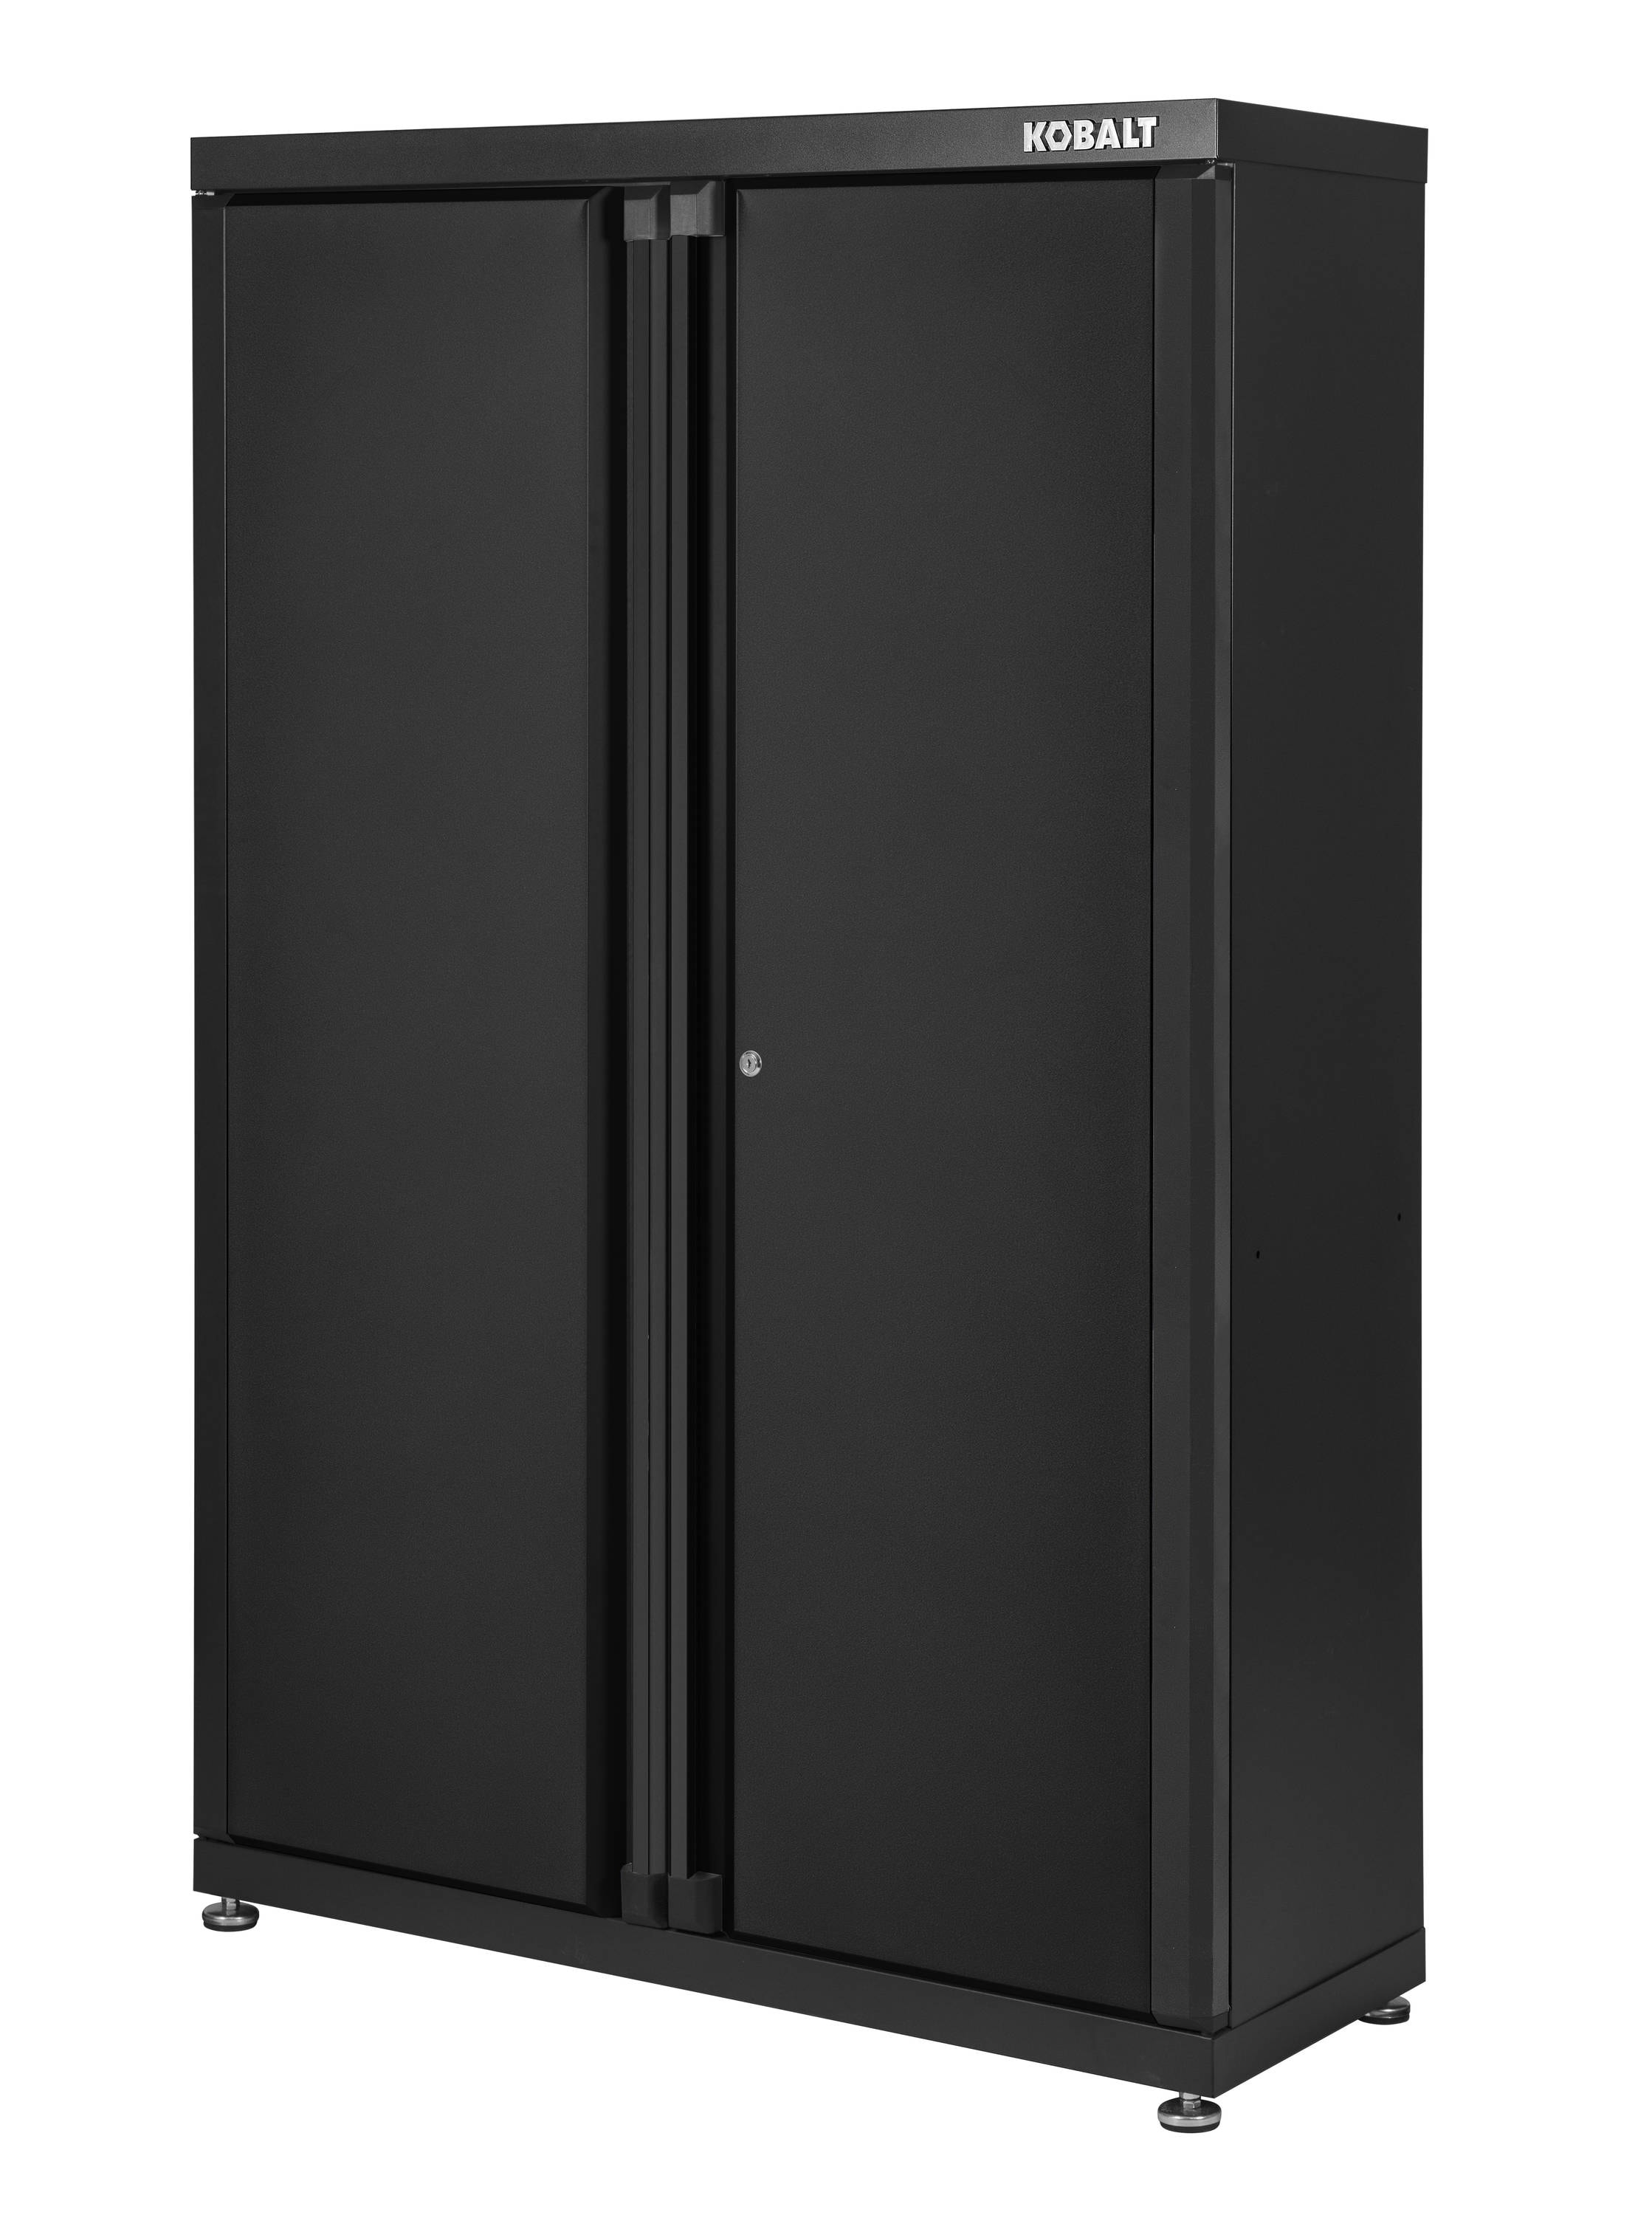 Kobalt Steel Freestanding Garage Cabinet in Black (48-in W x 72-in H x  18.5-in D) in the Garage Cabinets department at